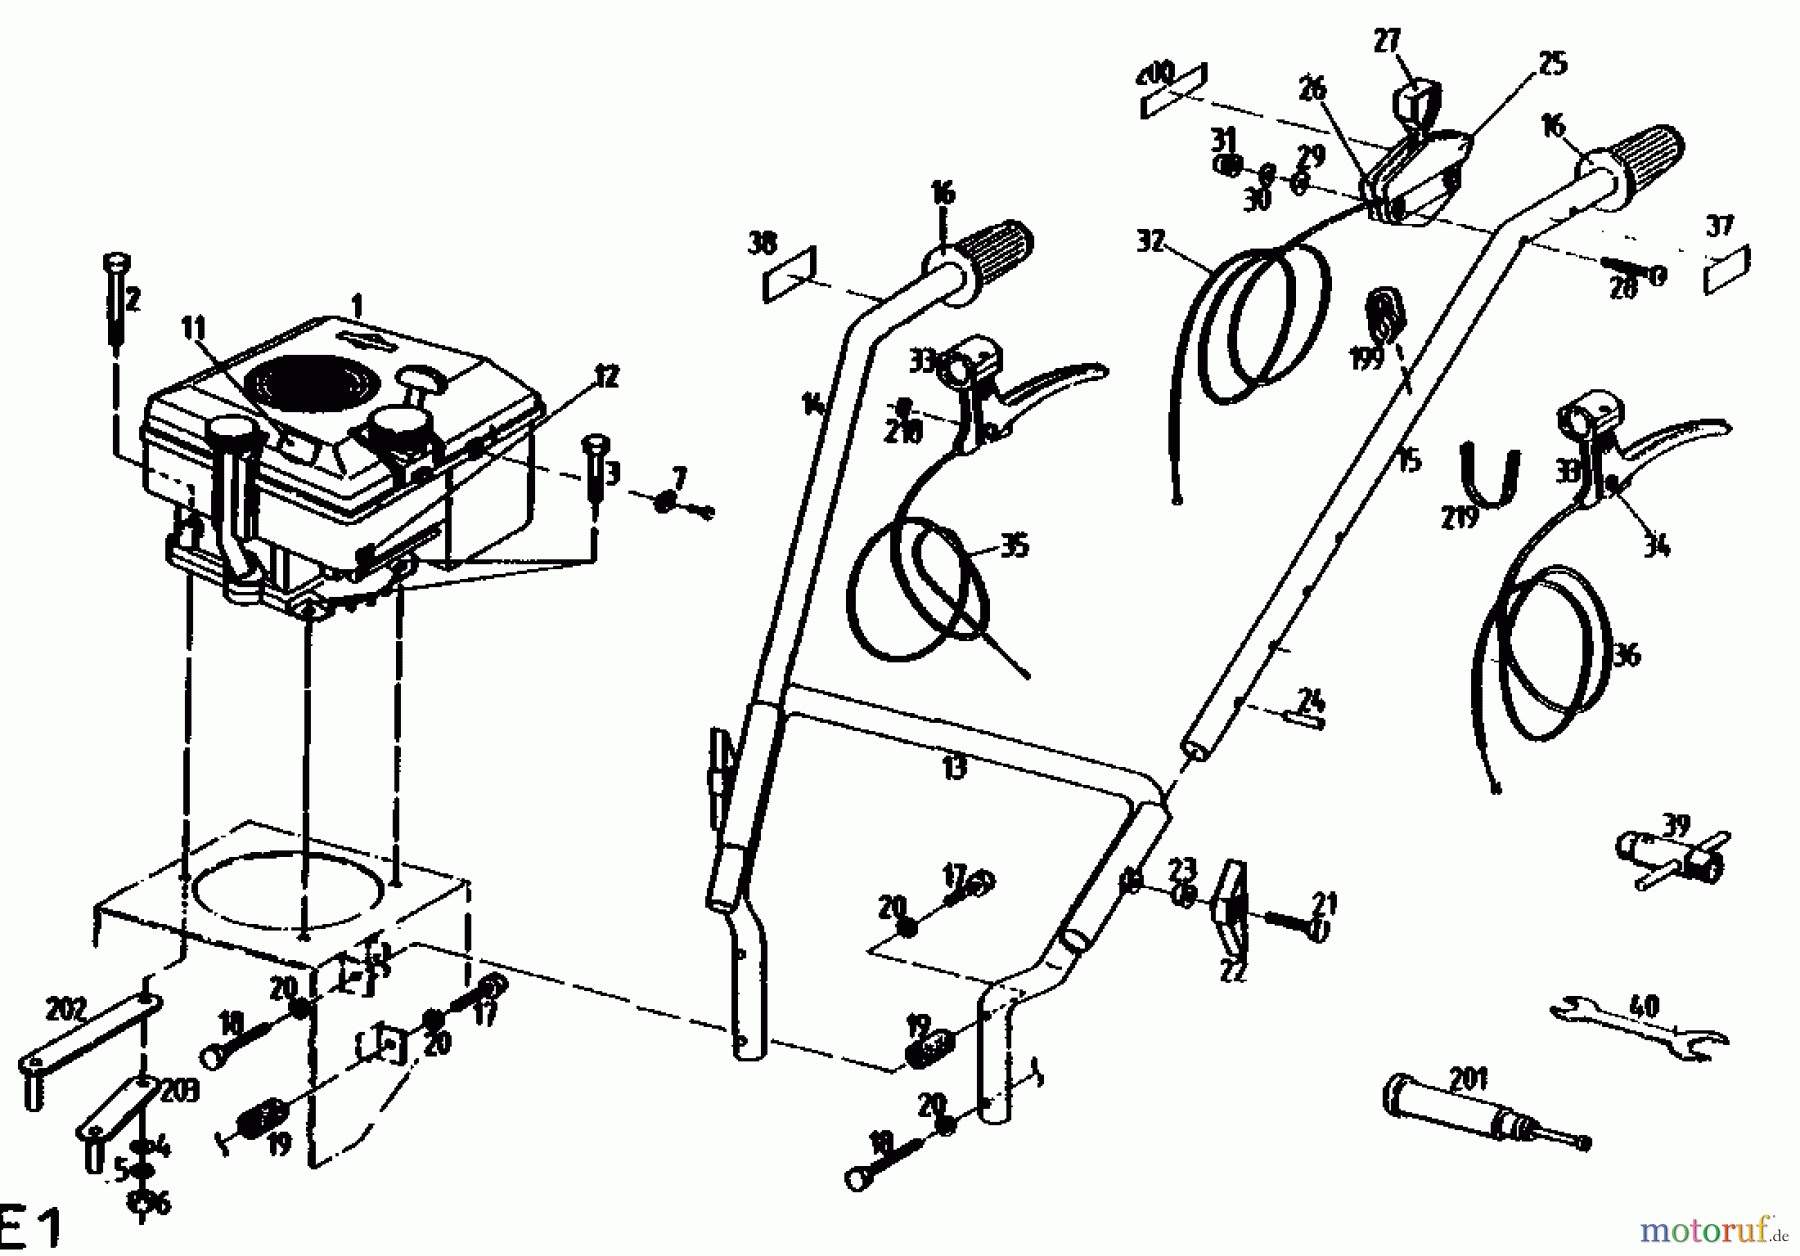  Gutbrod Cutter bar mower BM 710 07515.02  (1990) Handle